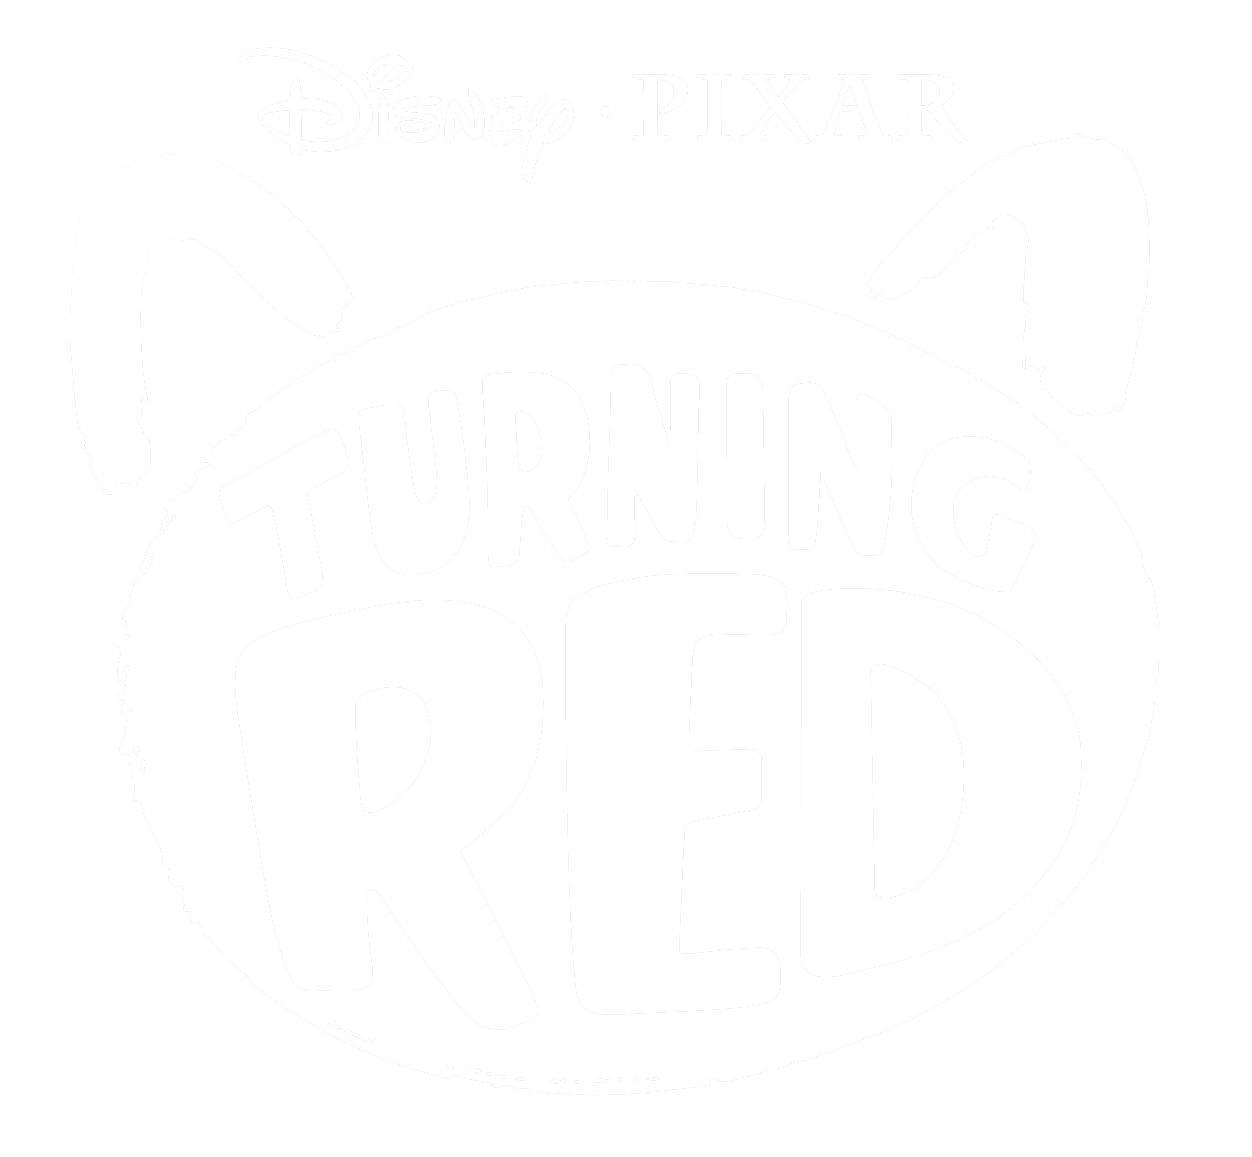 Disney_Pixar's Turning Red logo png. by mintmovi3 on DeviantArt